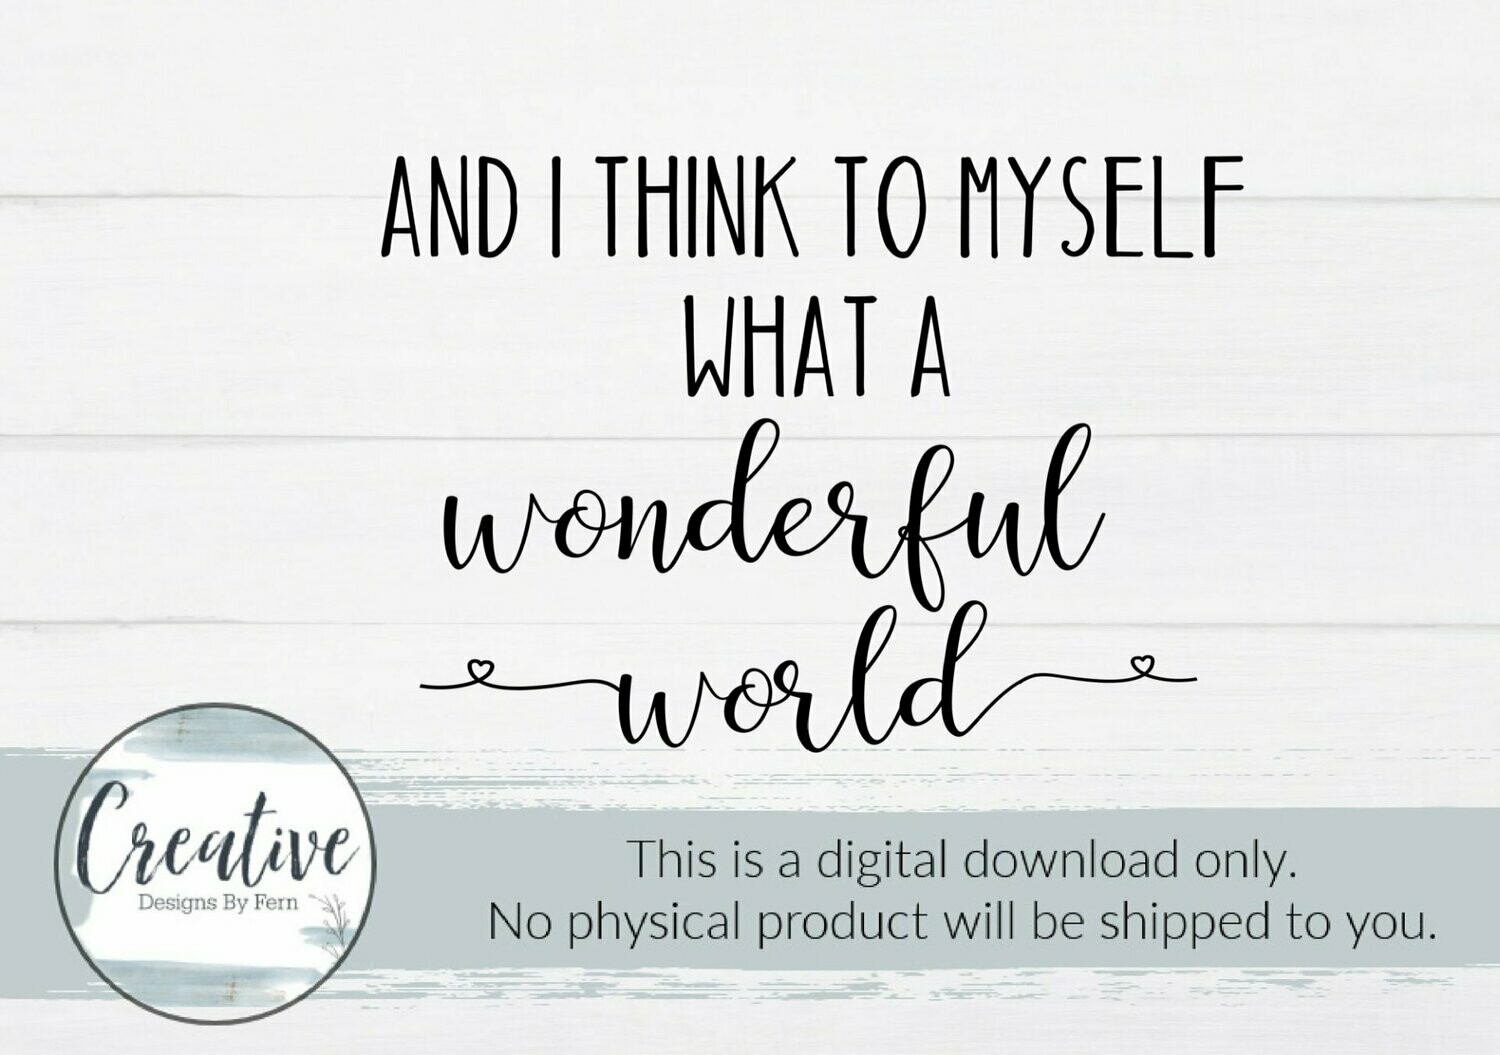 What a Wonderful World (Digital Download)